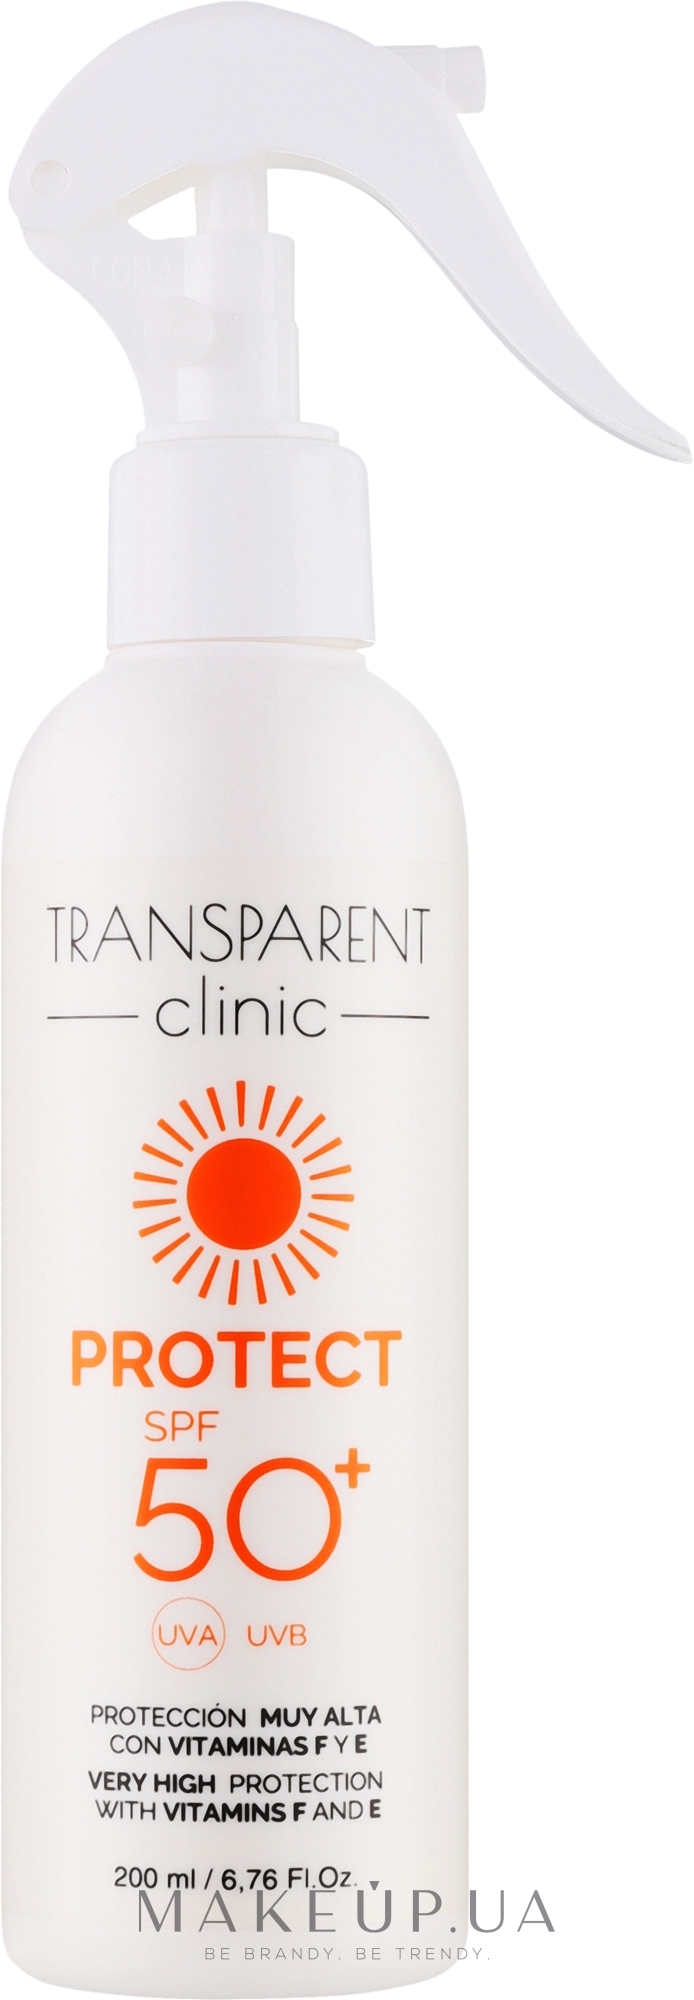 Солнцезащитный спрей для тела - Transparent Clinic Protect SPF50+ — фото 200ml